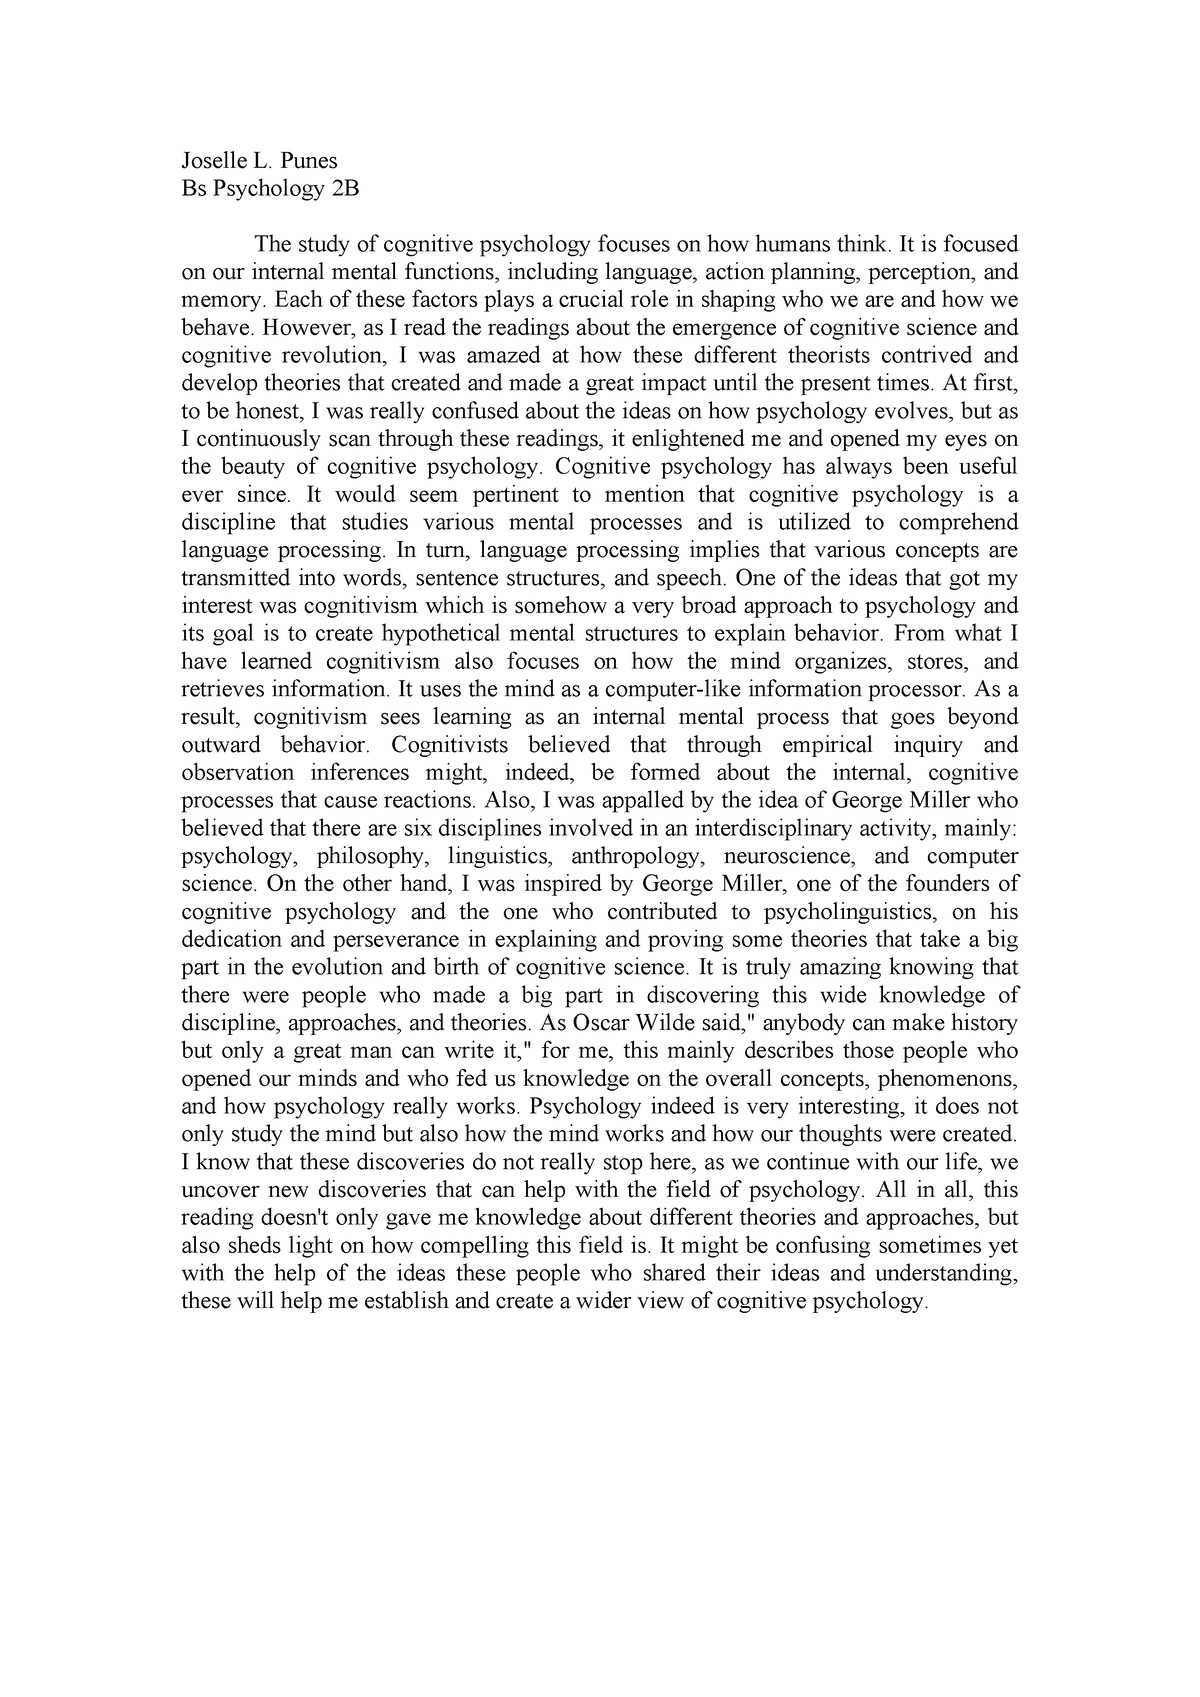 Punes, Joselle- Summary Paper - Joselle L. Punes Bs Psychology 2B The ...